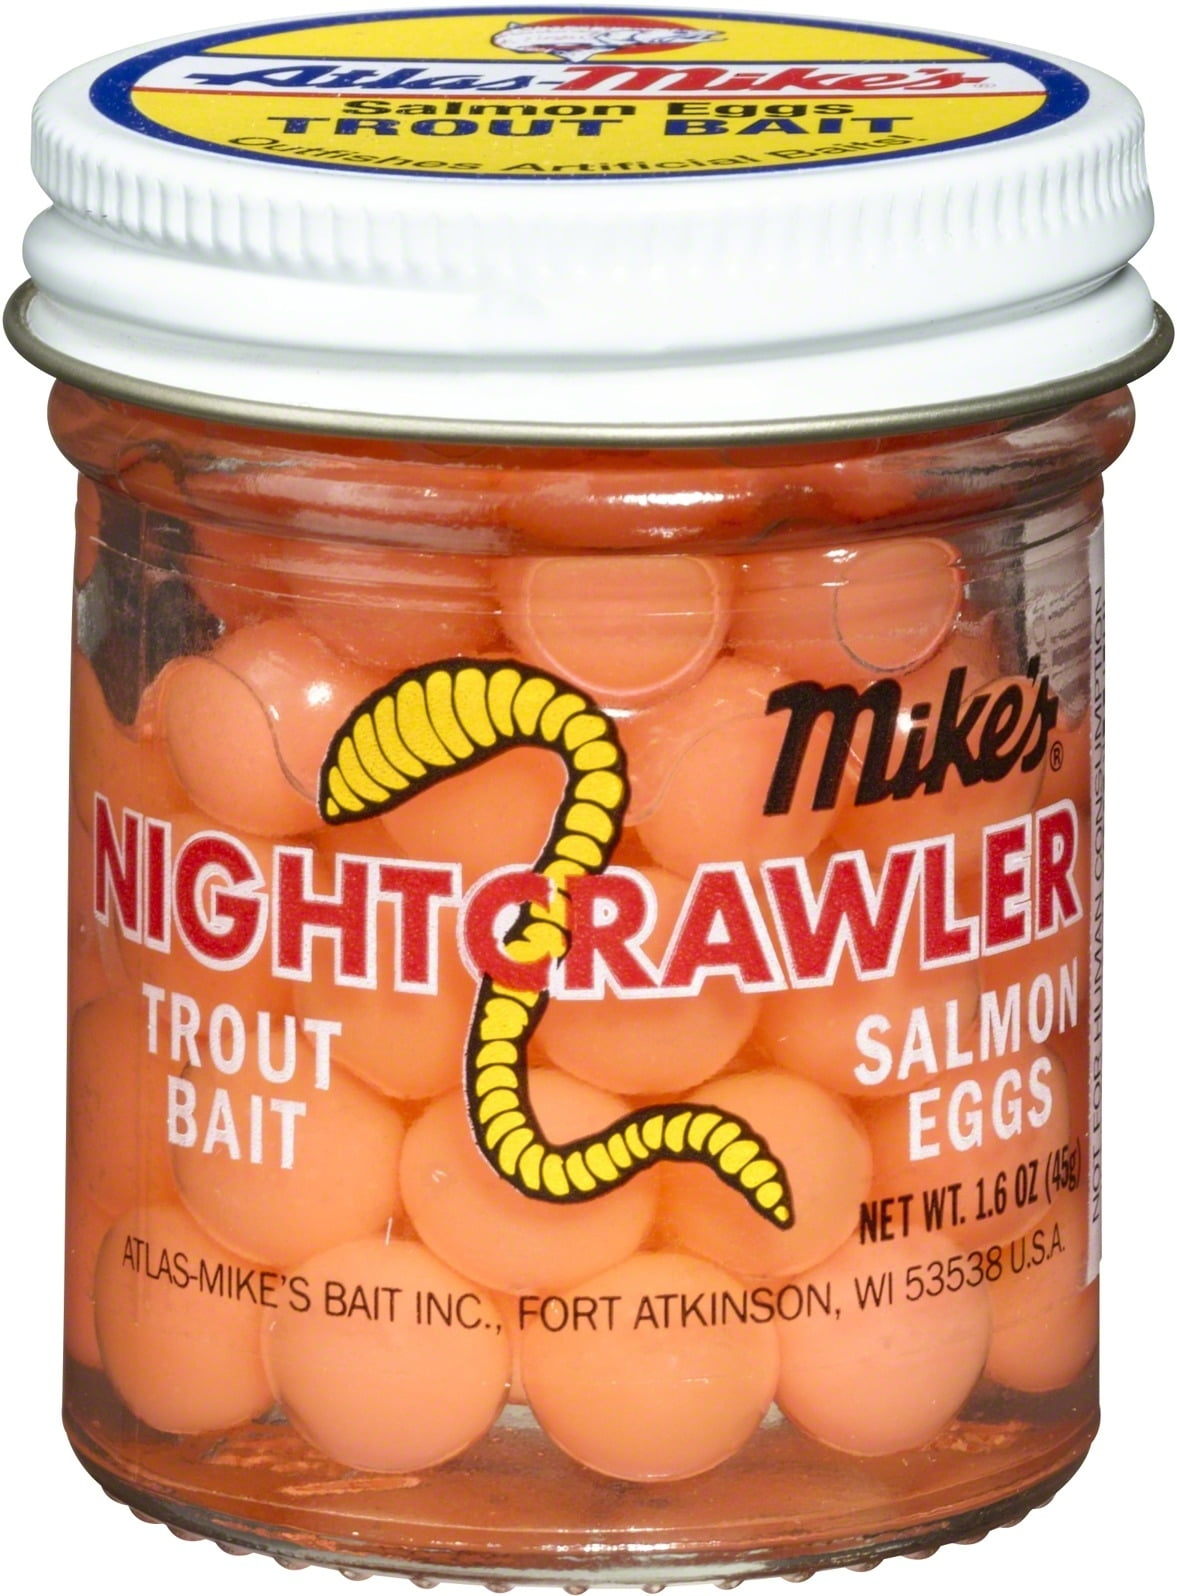 Atlas-Mike's® Nightcrawler Salmon Eggs Trout Bait 1.1 oz